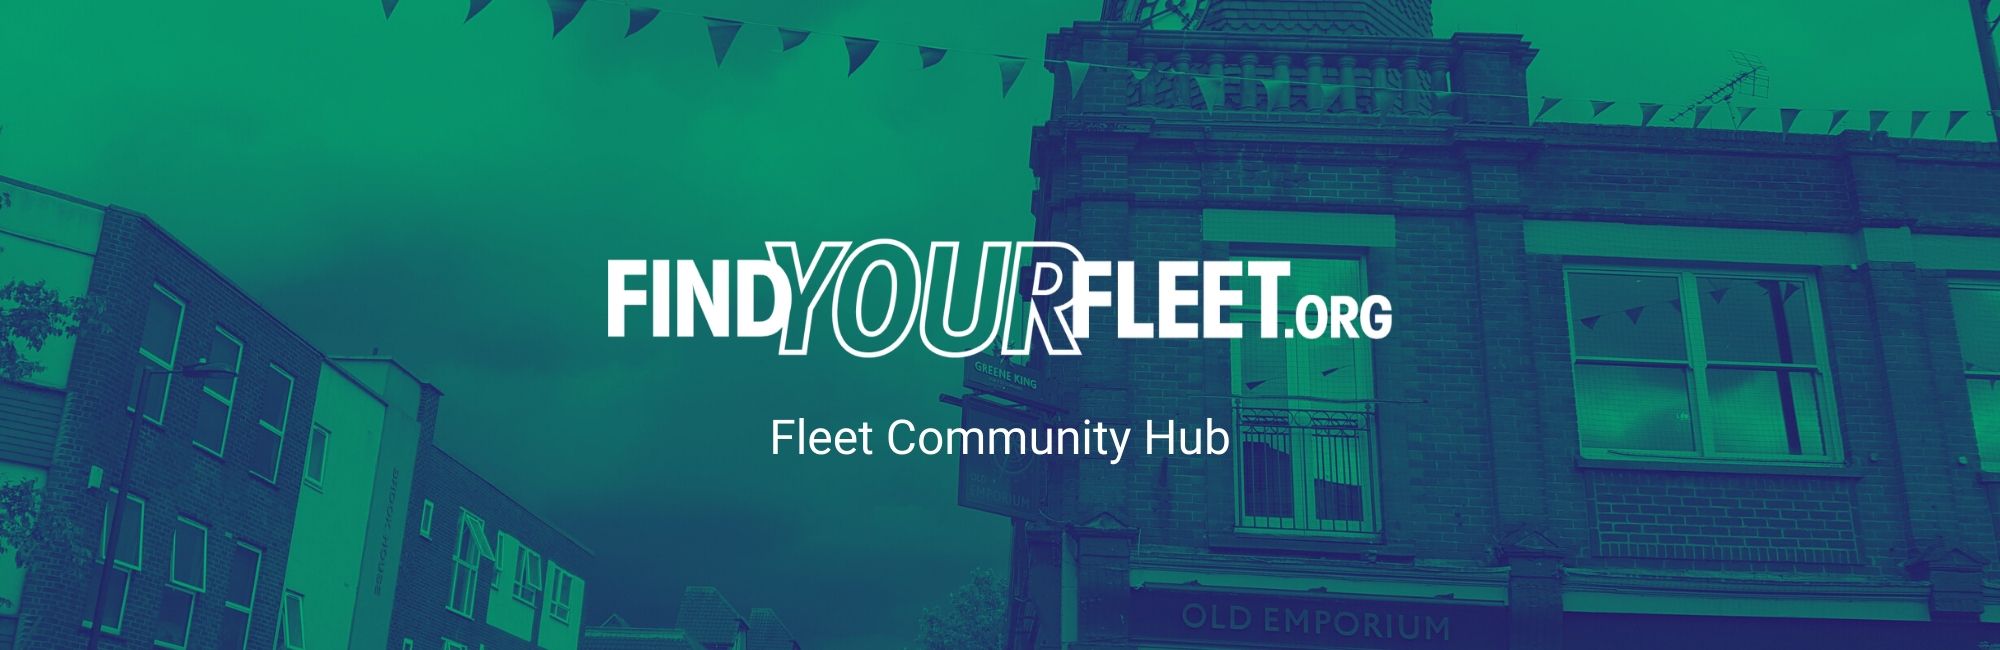 Fleet Community Hub